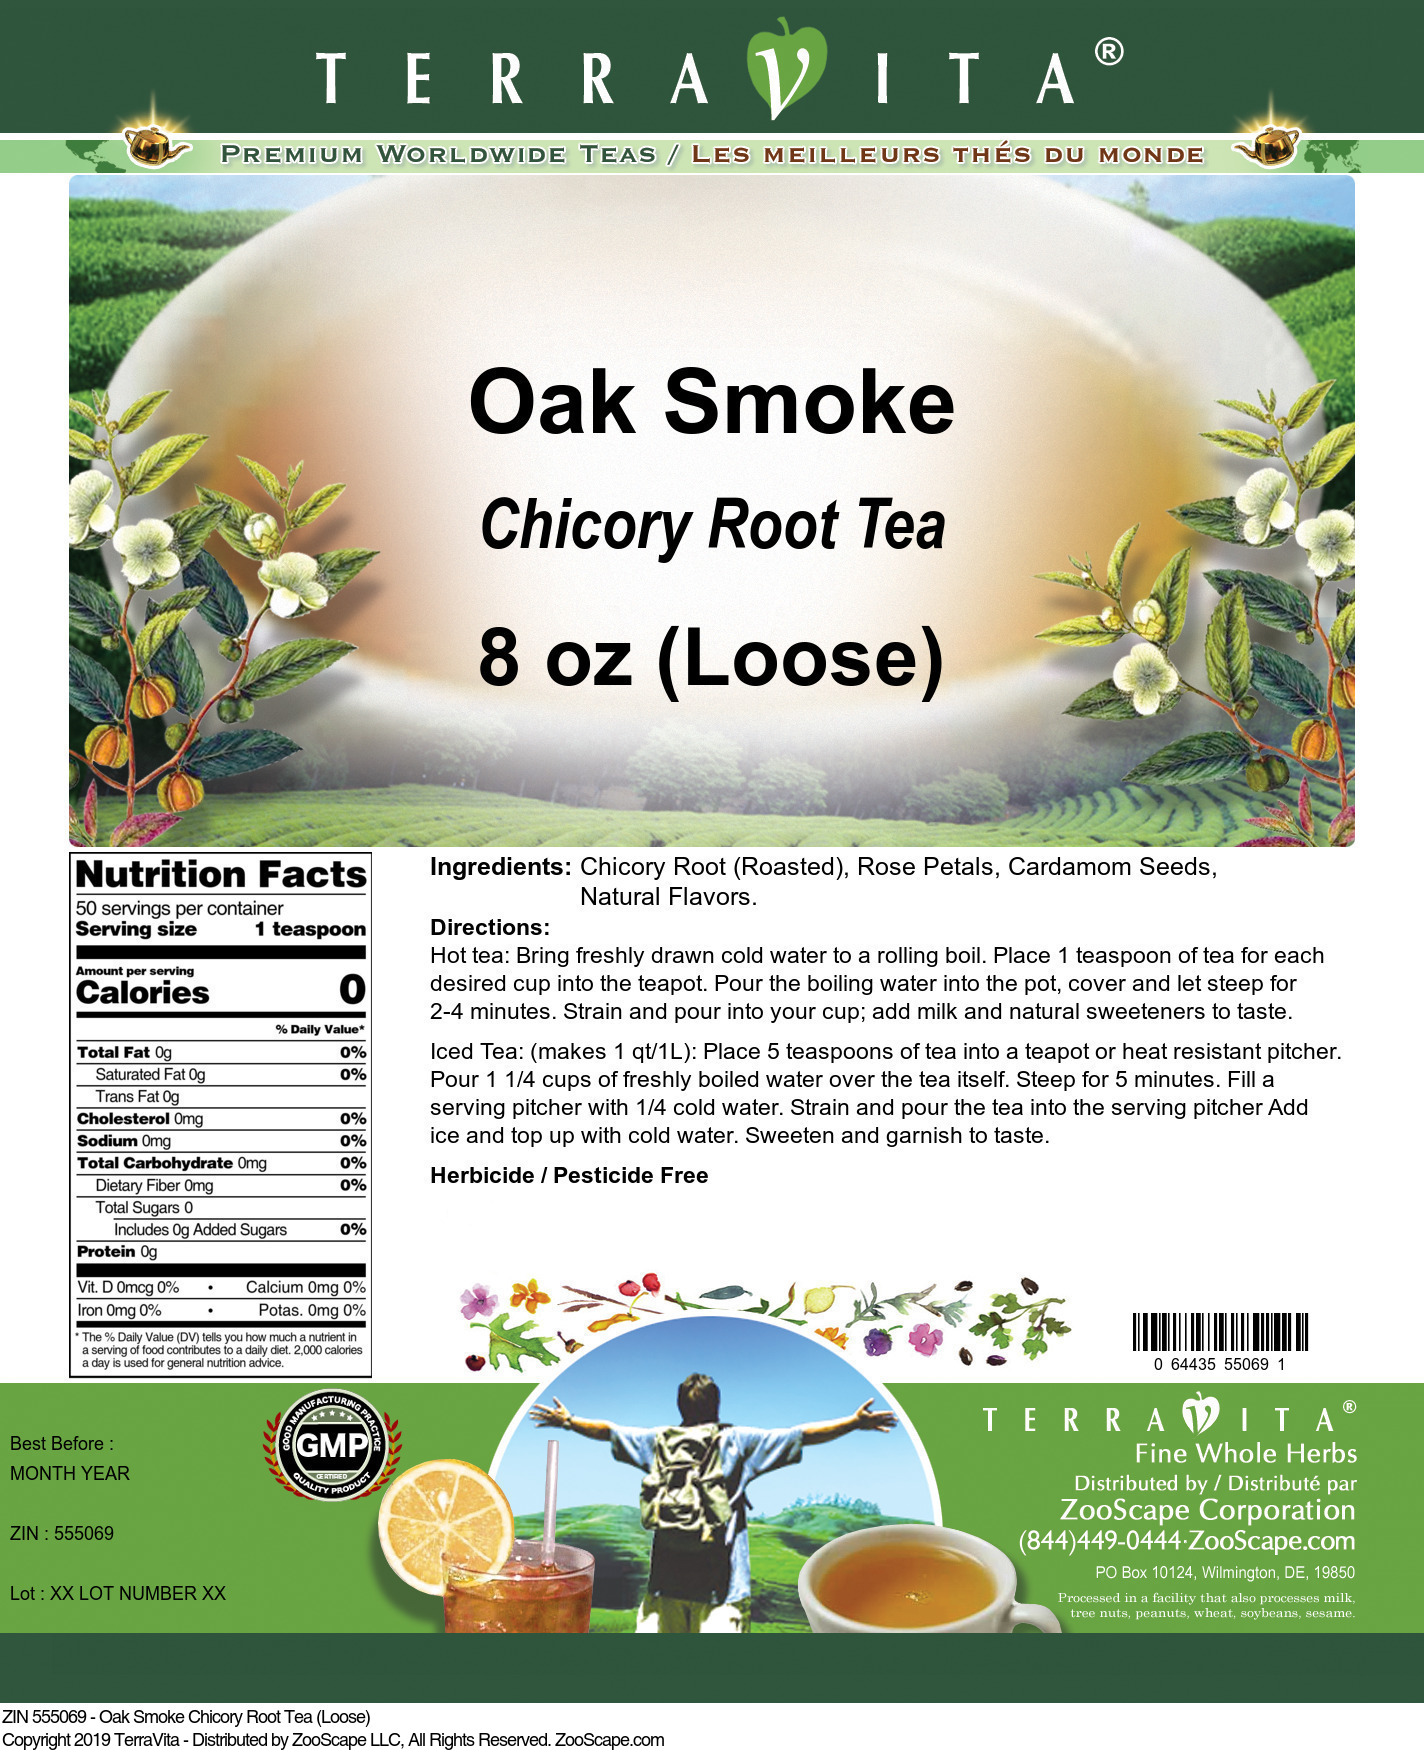 Oak Smoke Chicory Root Tea (Loose) - Label